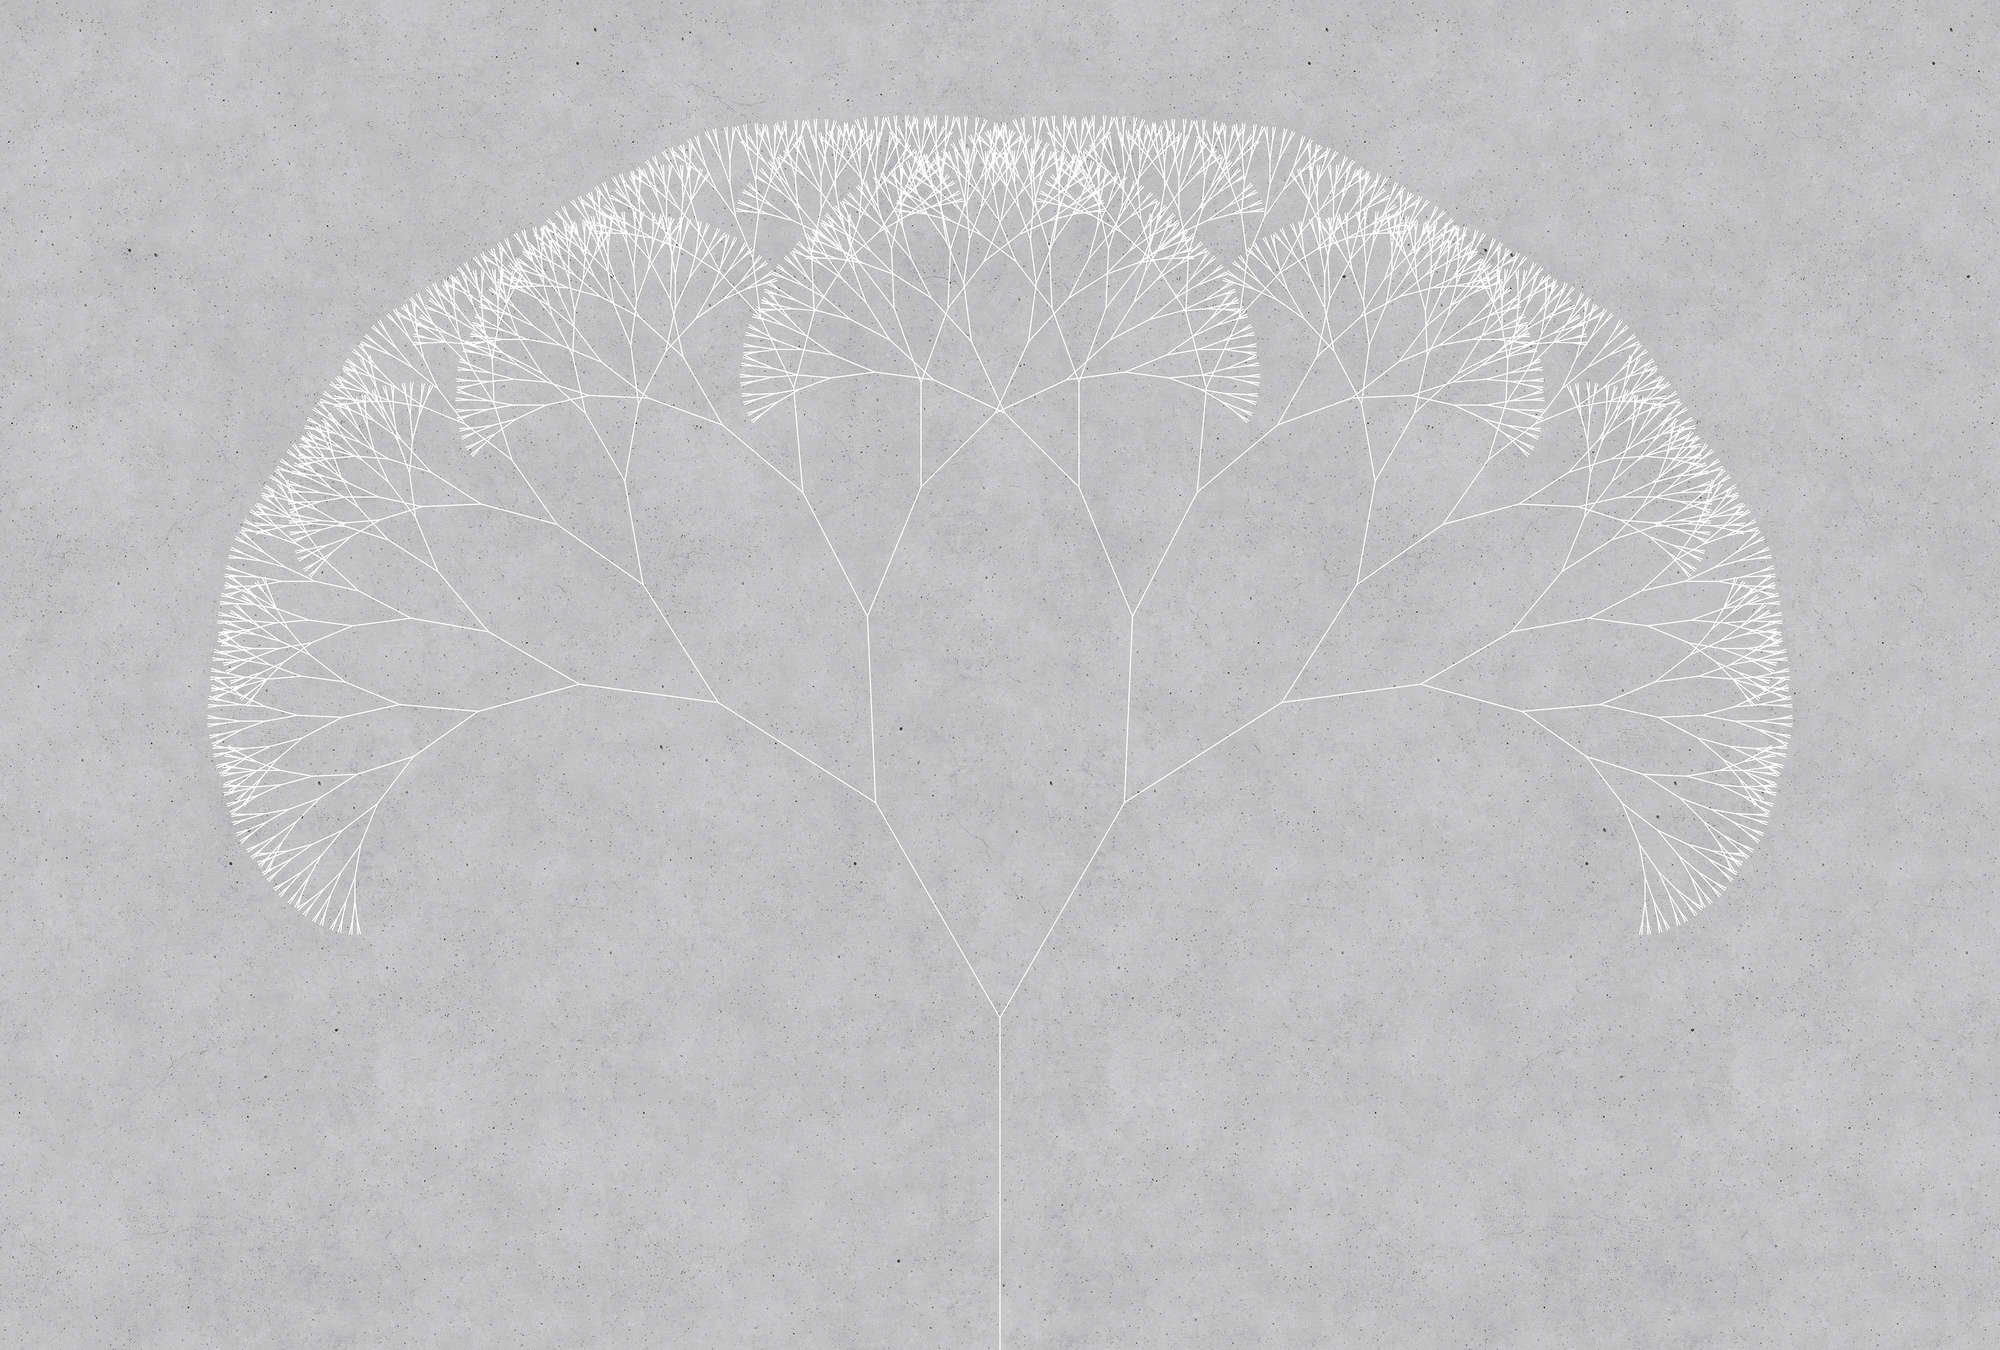             Fototapete Pusteblumen Baum – Grau, Weiß
        